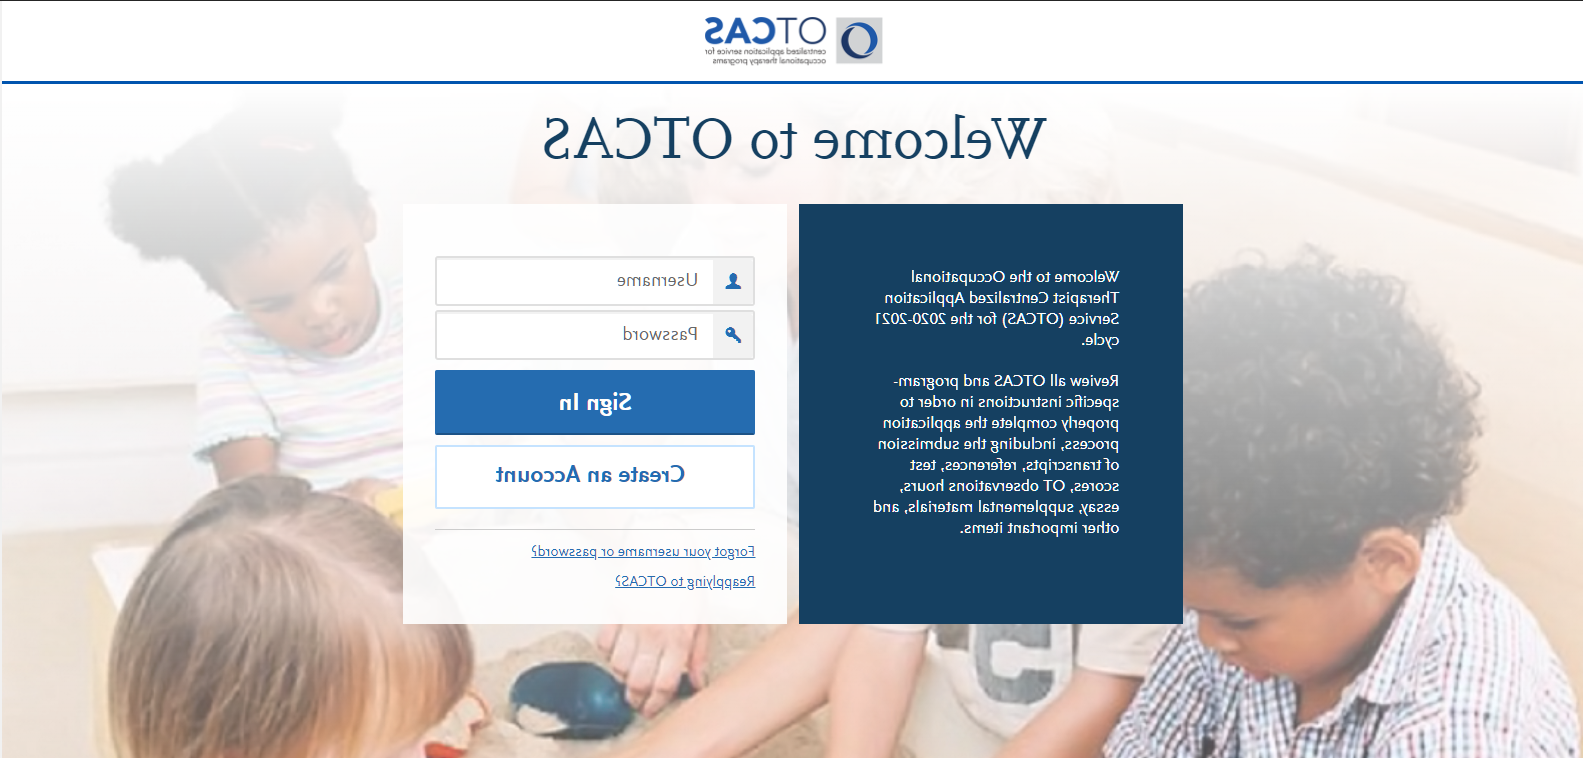 OTCAS_webpage_Screenshot